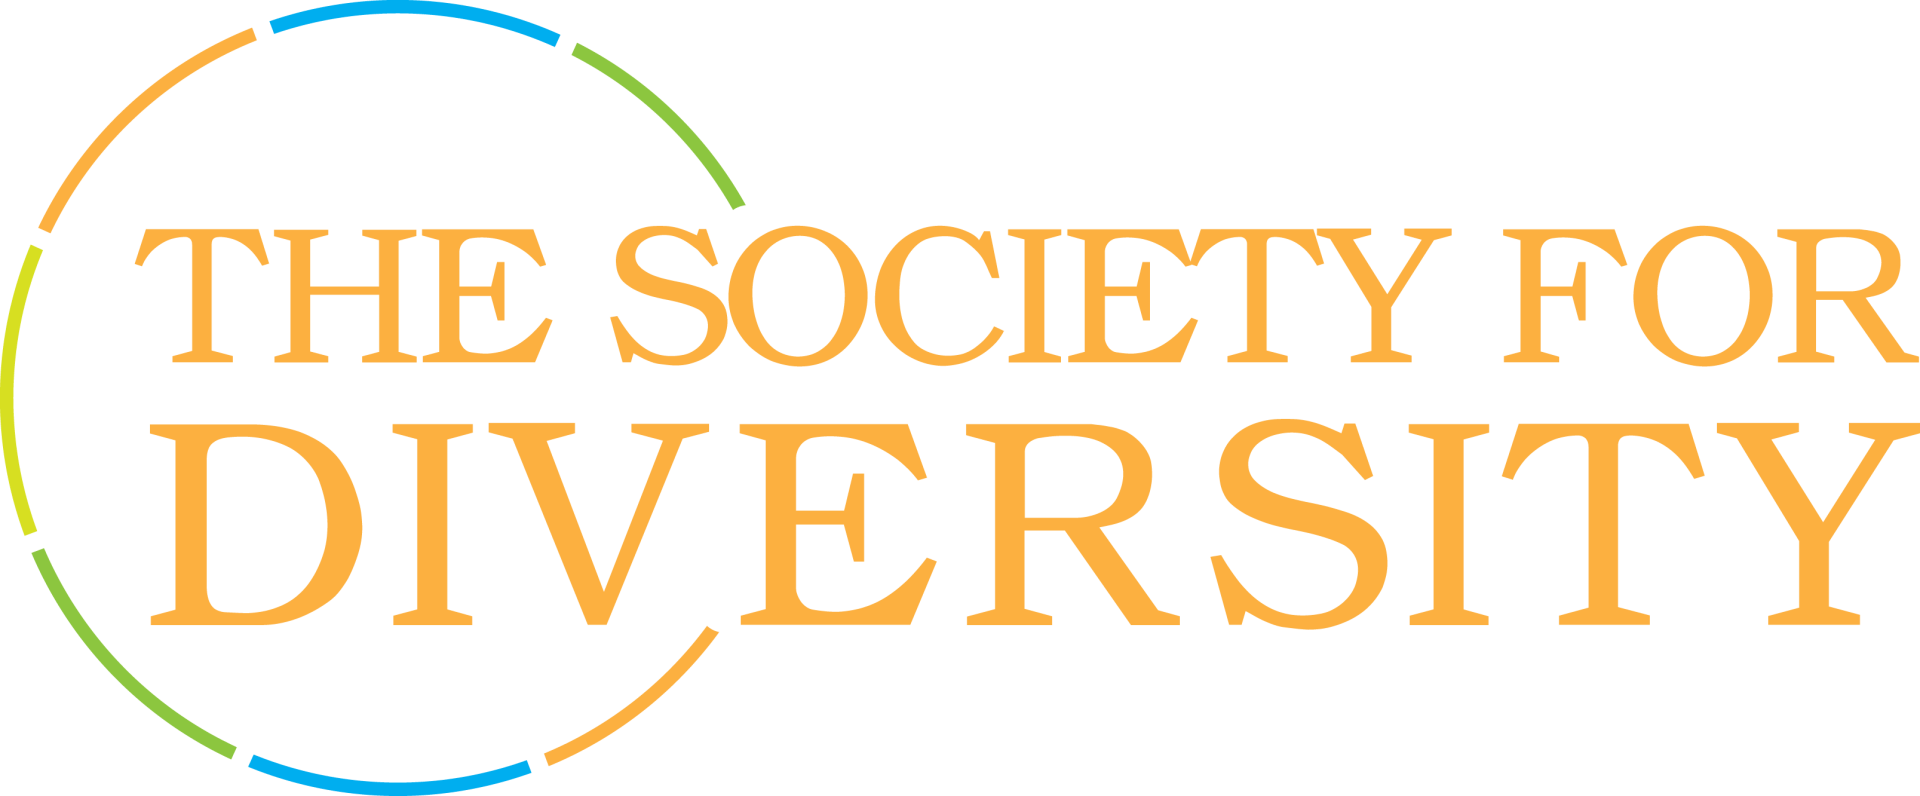 Society for Diversity - logo